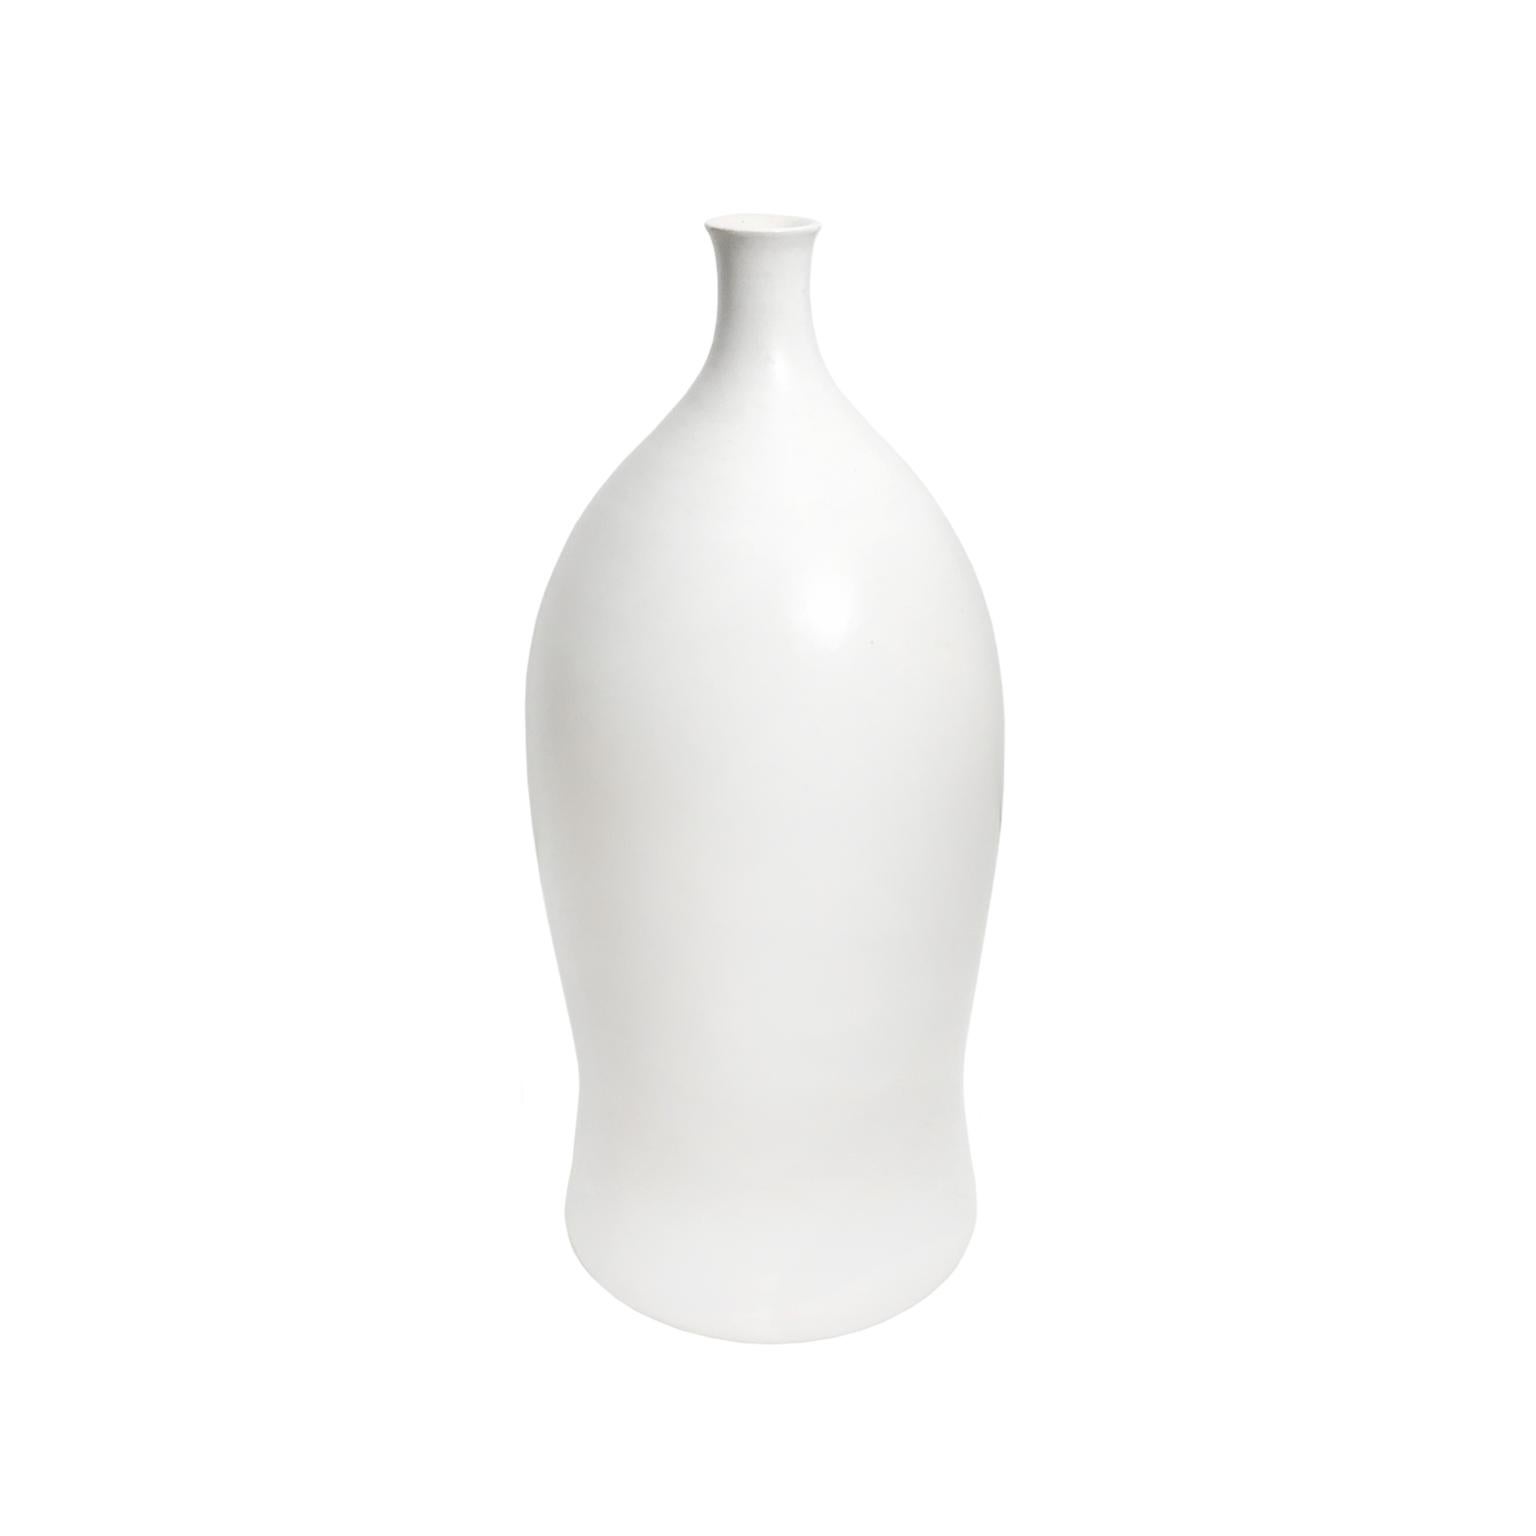 Alabaster Glaze Ceramic Bottle #7 by Sandi Fellman